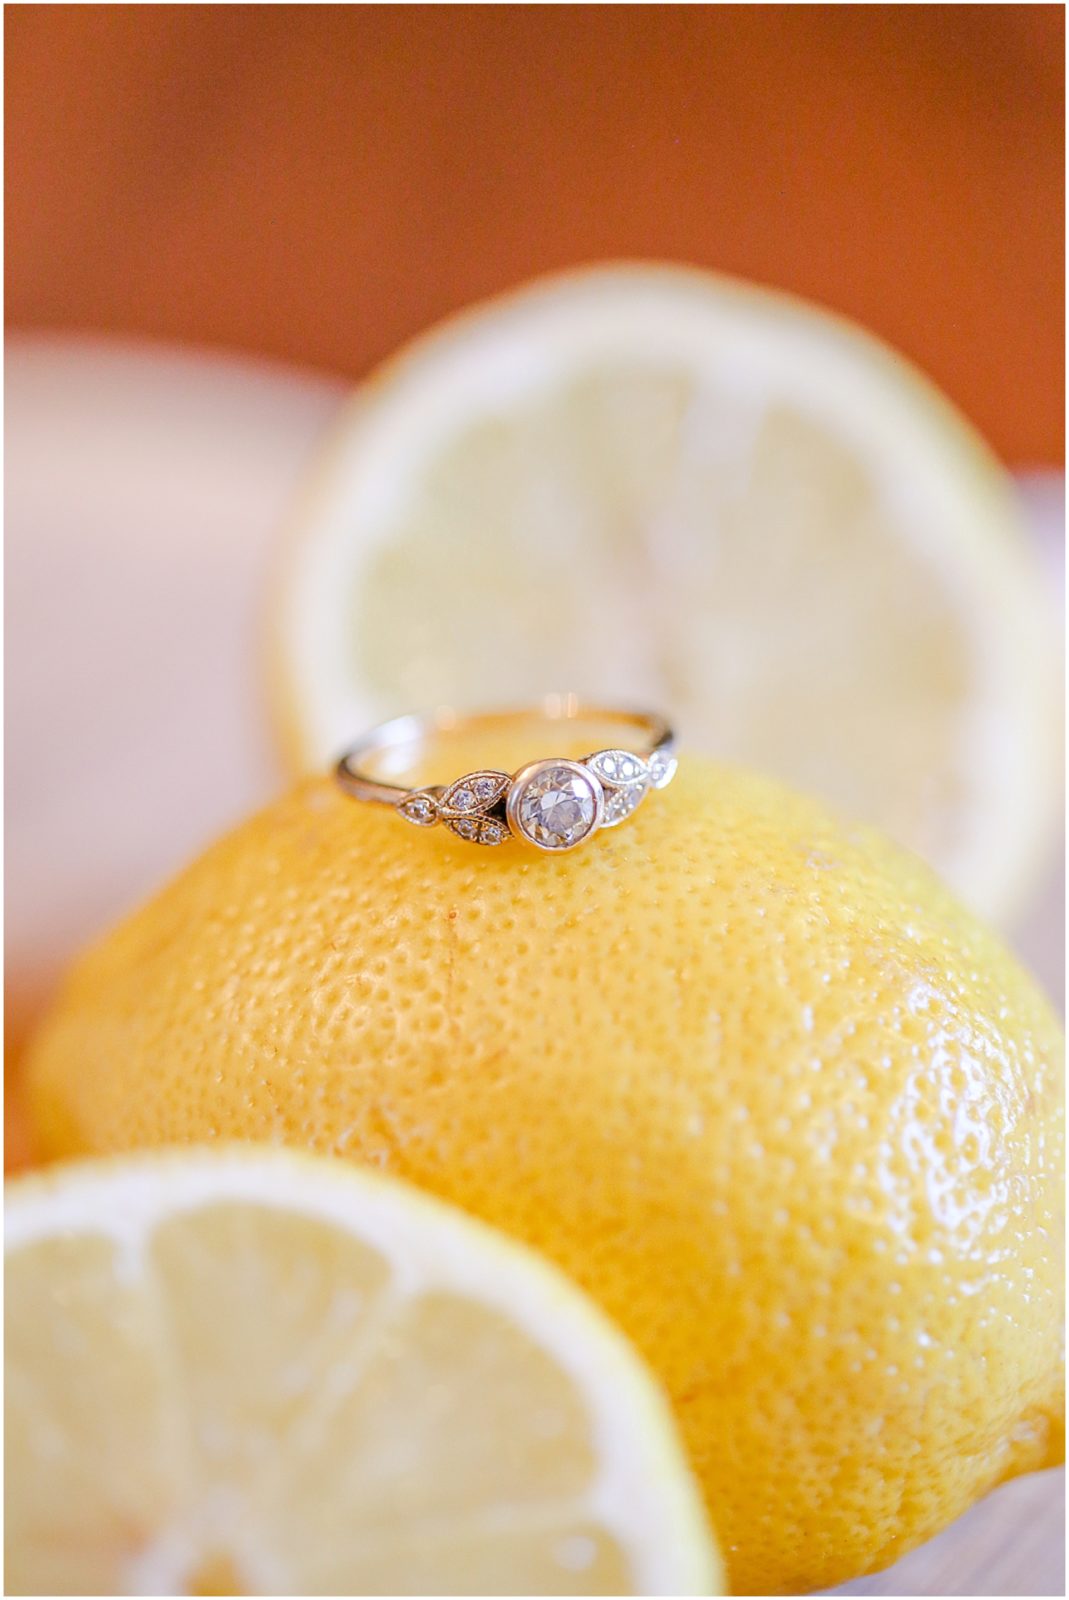 engagement ring on a lemon - engagement photographer